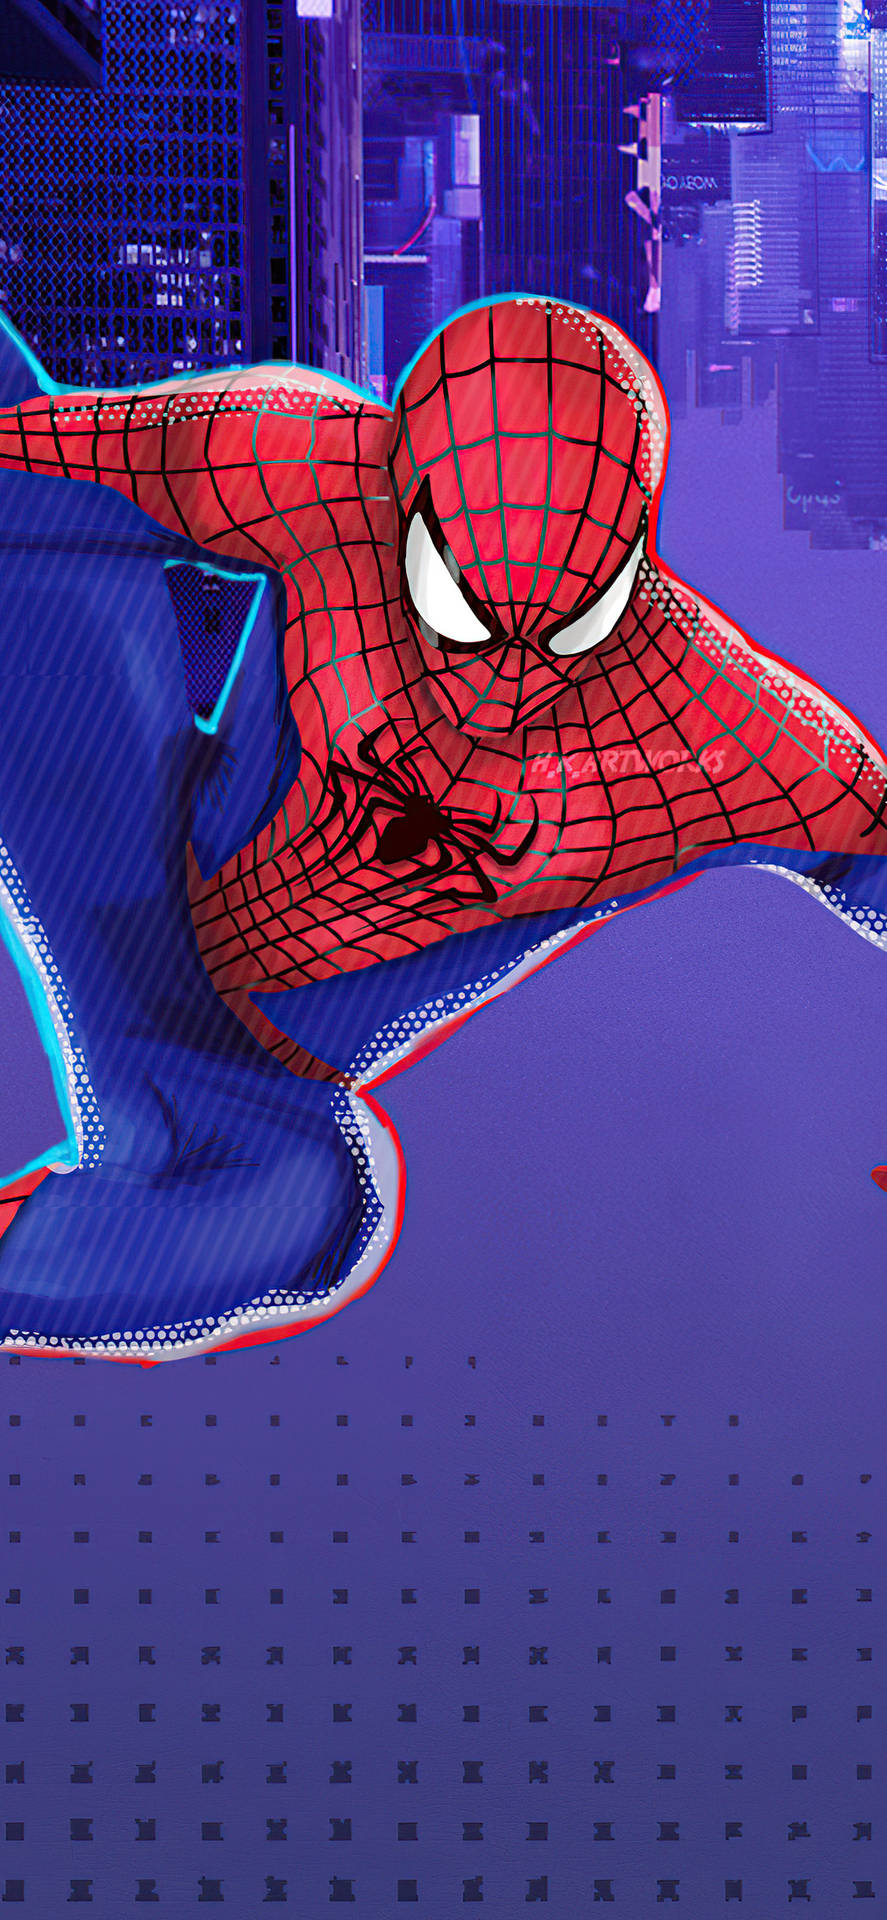 The Amazing Spider-Man Web-Slinging Through NYC Wallpaper